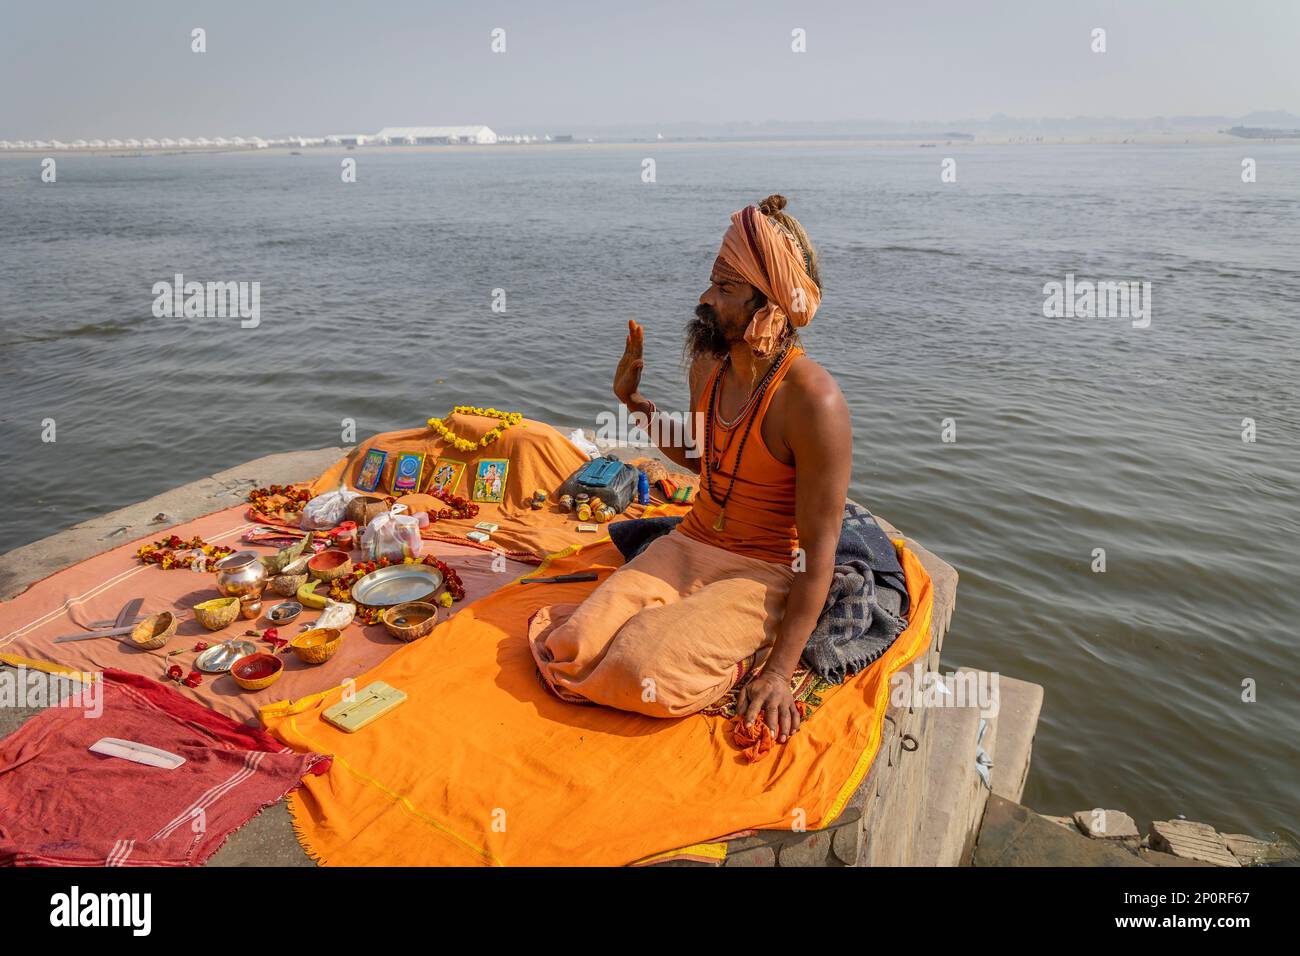 Aghori Baba images Aghori sadhu Indian baba in Varanasi 80 Ghat Varanasi image Varanasi, Uttar Pradesh, India, 29 November 2022 Stock Photo